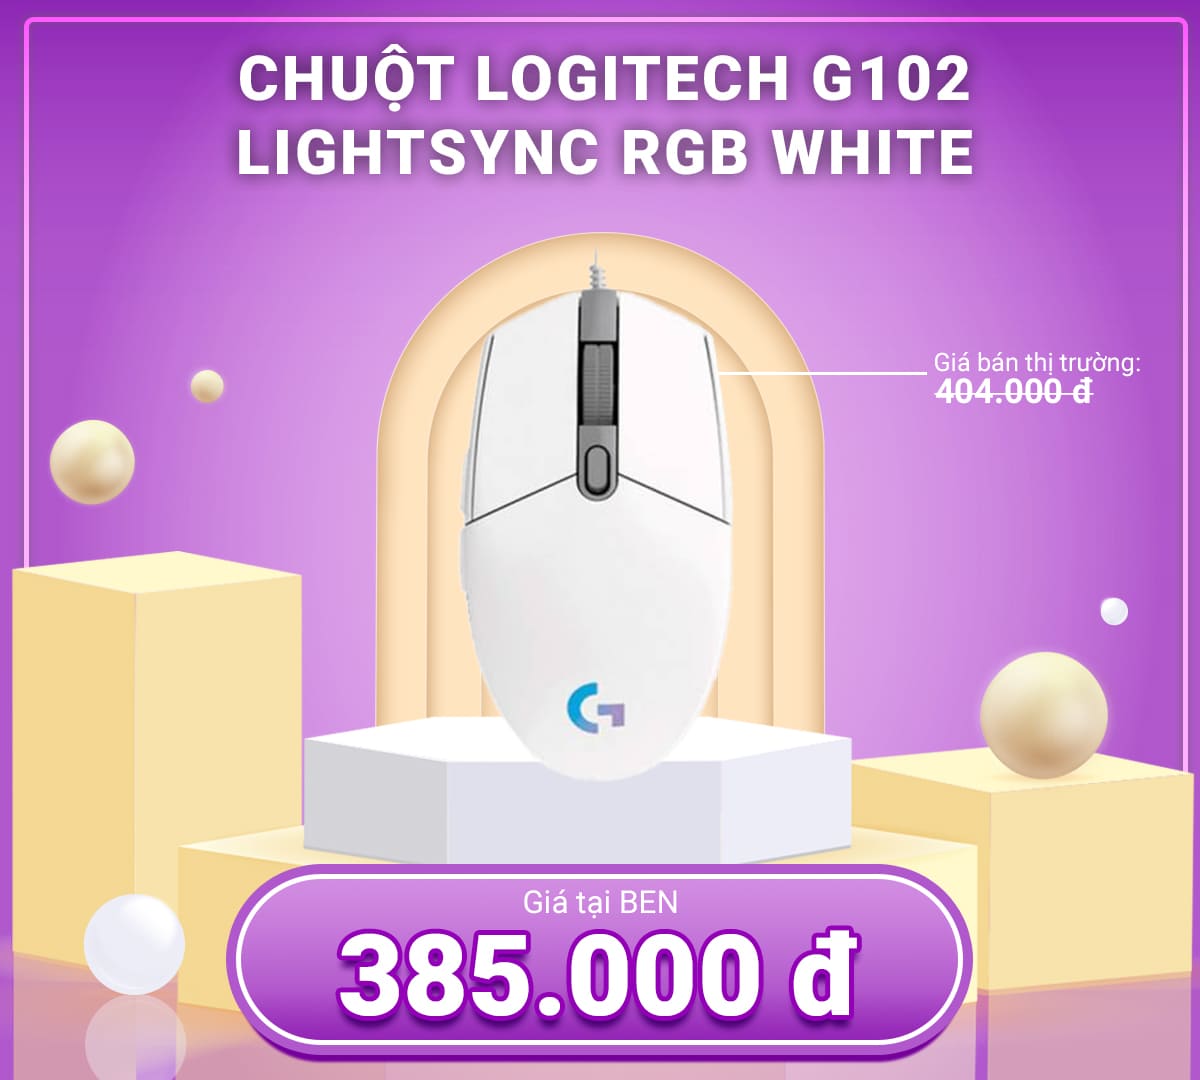 Chuot co day Logitech g102 white